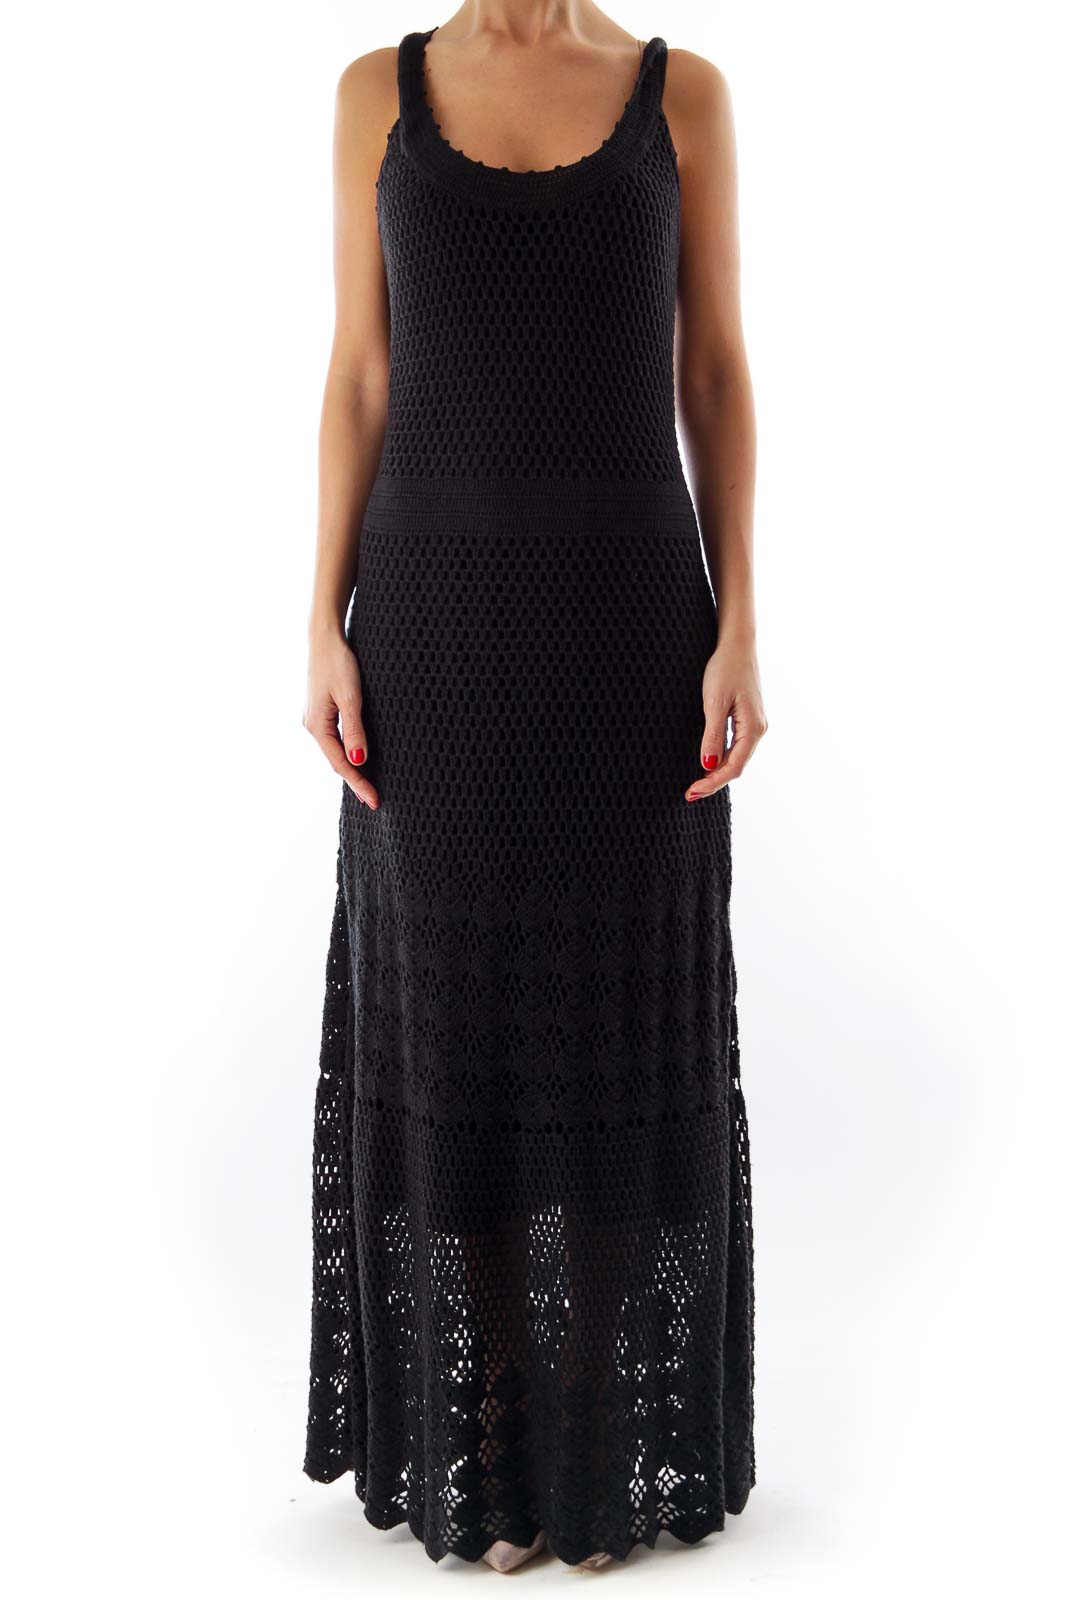 Black Crochet Long Dress Front